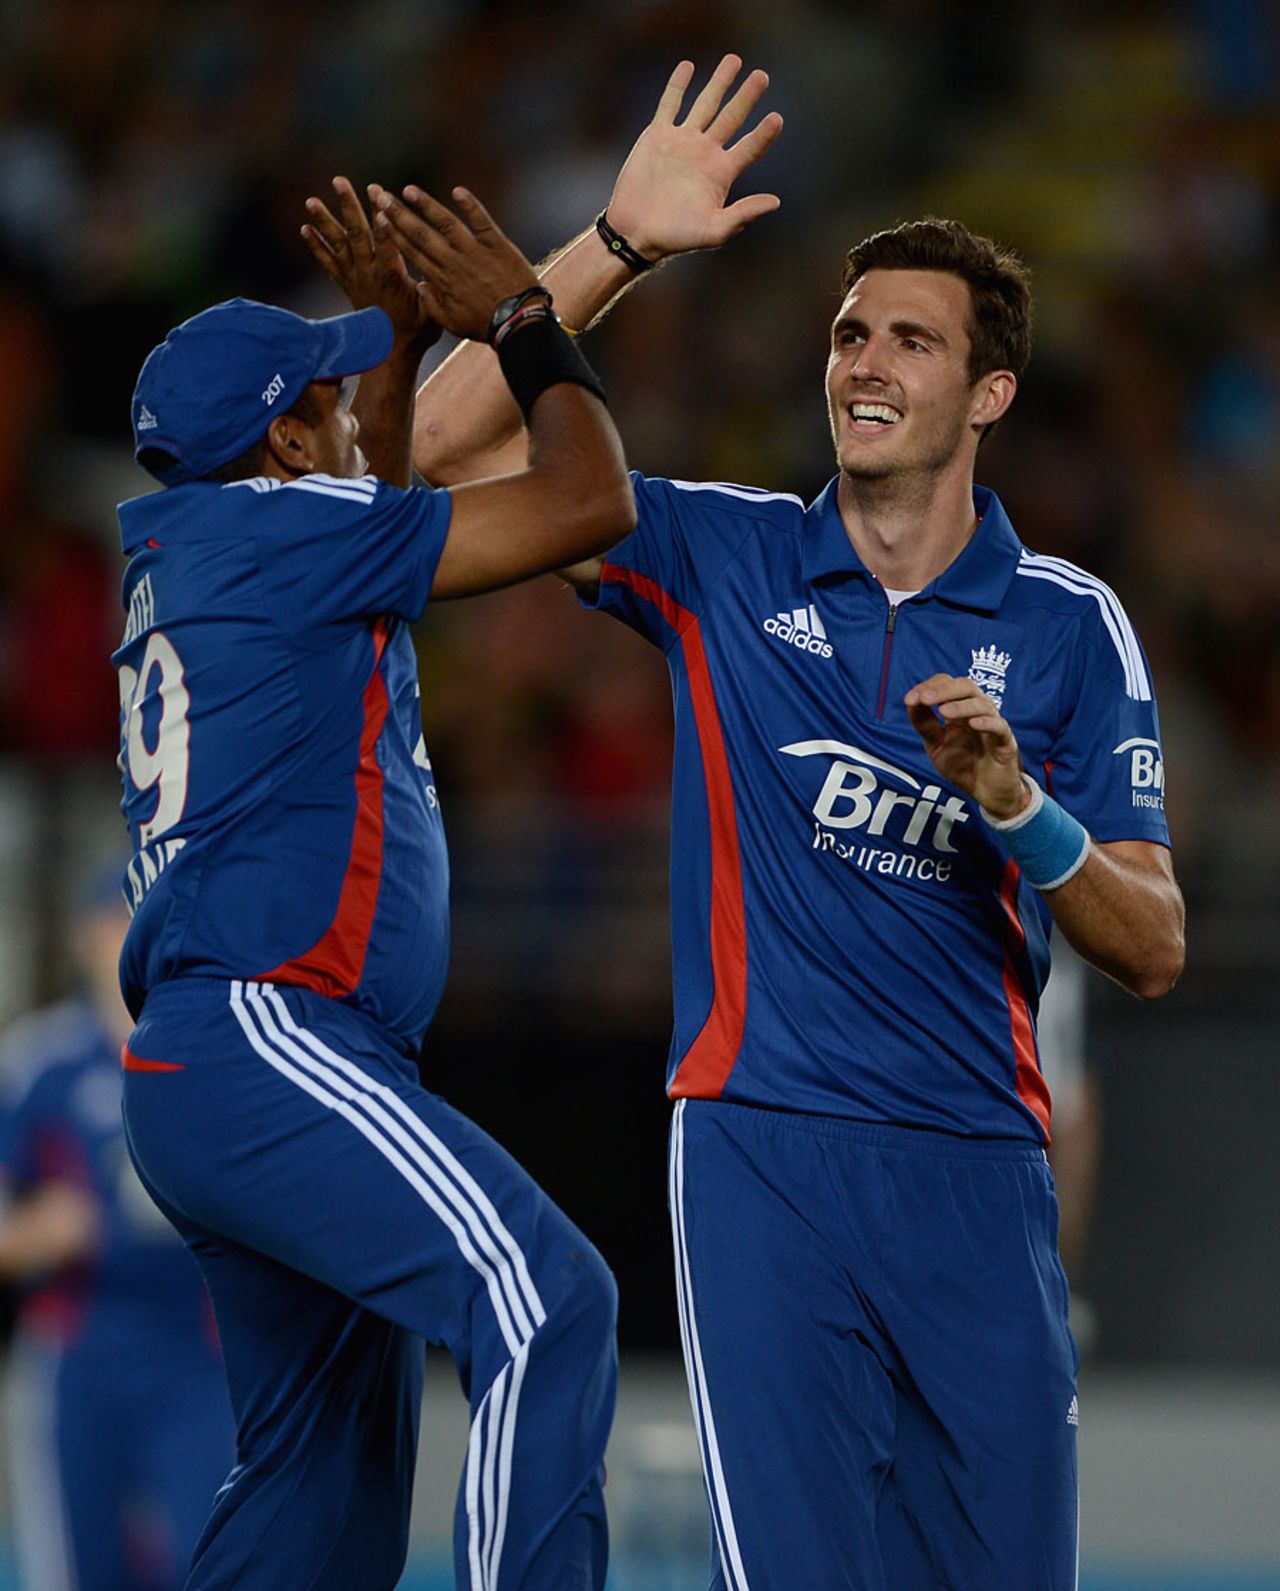 Steven Finn took three wickets, New Zealand v England, 1st T20, Auckland, February 9, 2013